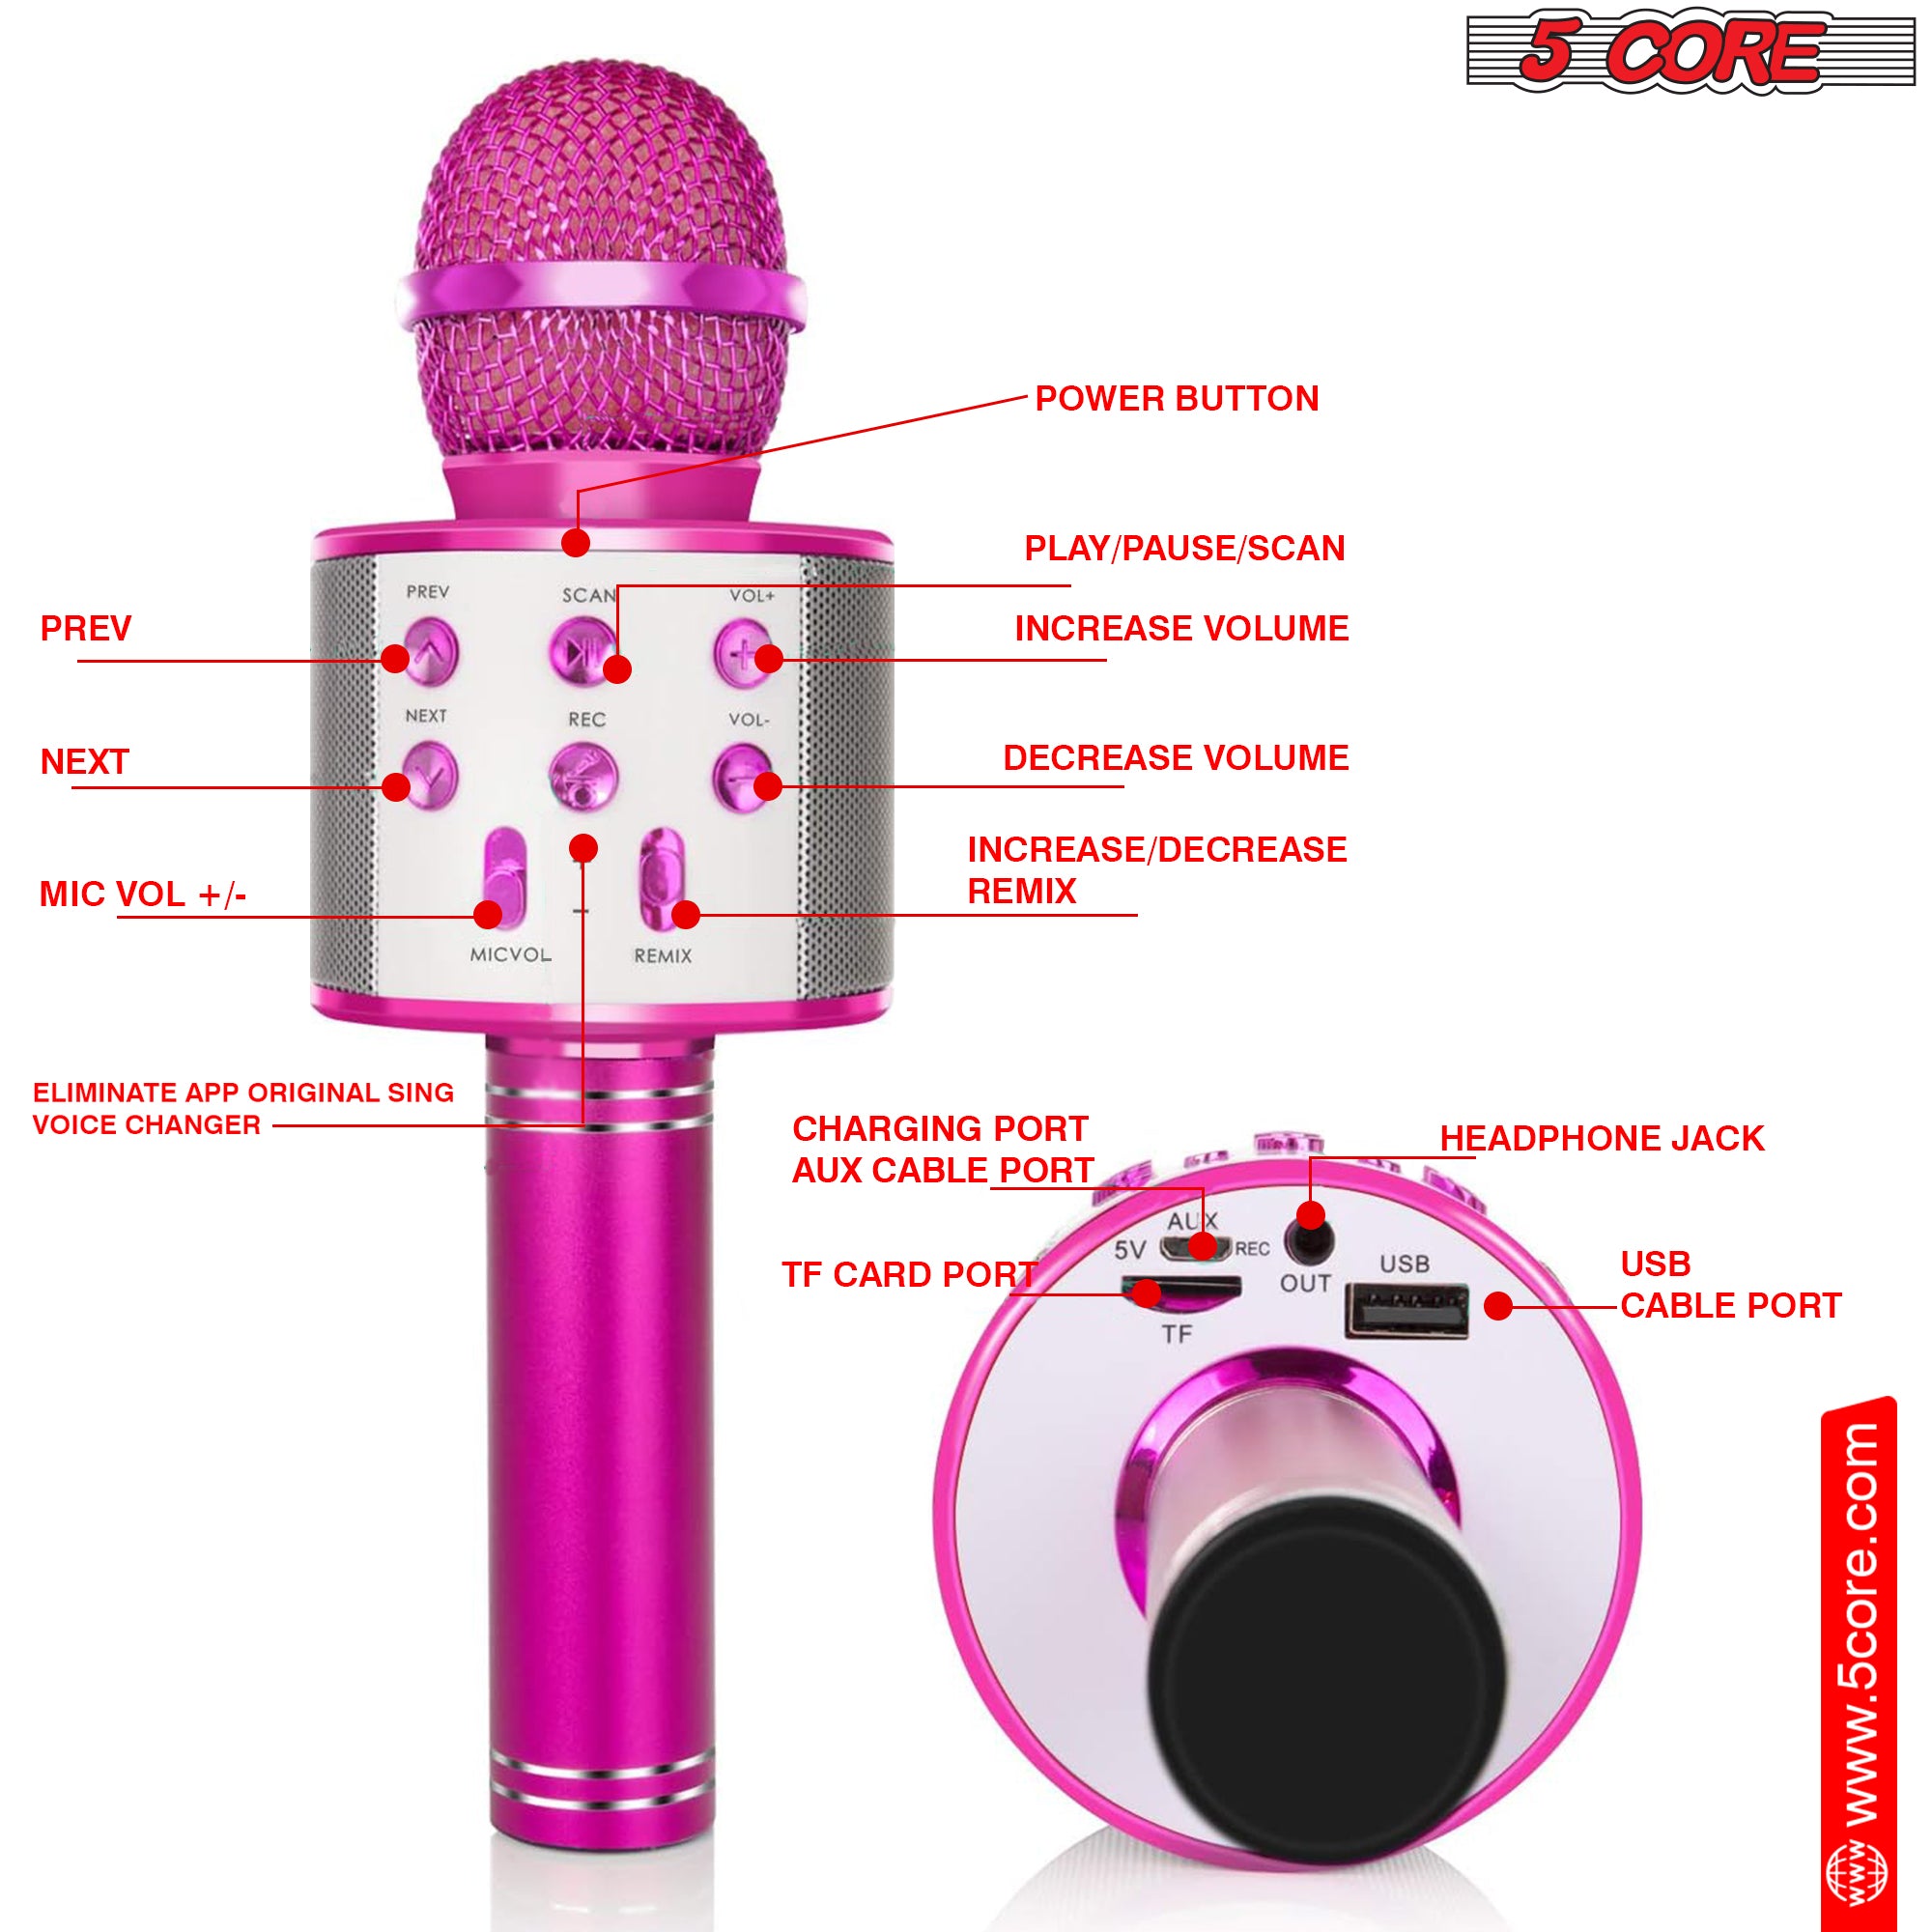 5 Core Bluetooth Wireless Karaoke Microphone, All-in-One Premium Handheld Karaoke Mic Speaker Recorder Player w/ Adjustable Remix FM Radio Great Gifts for Girls Boys Adults All Age (Pink)- WM SPK PINK